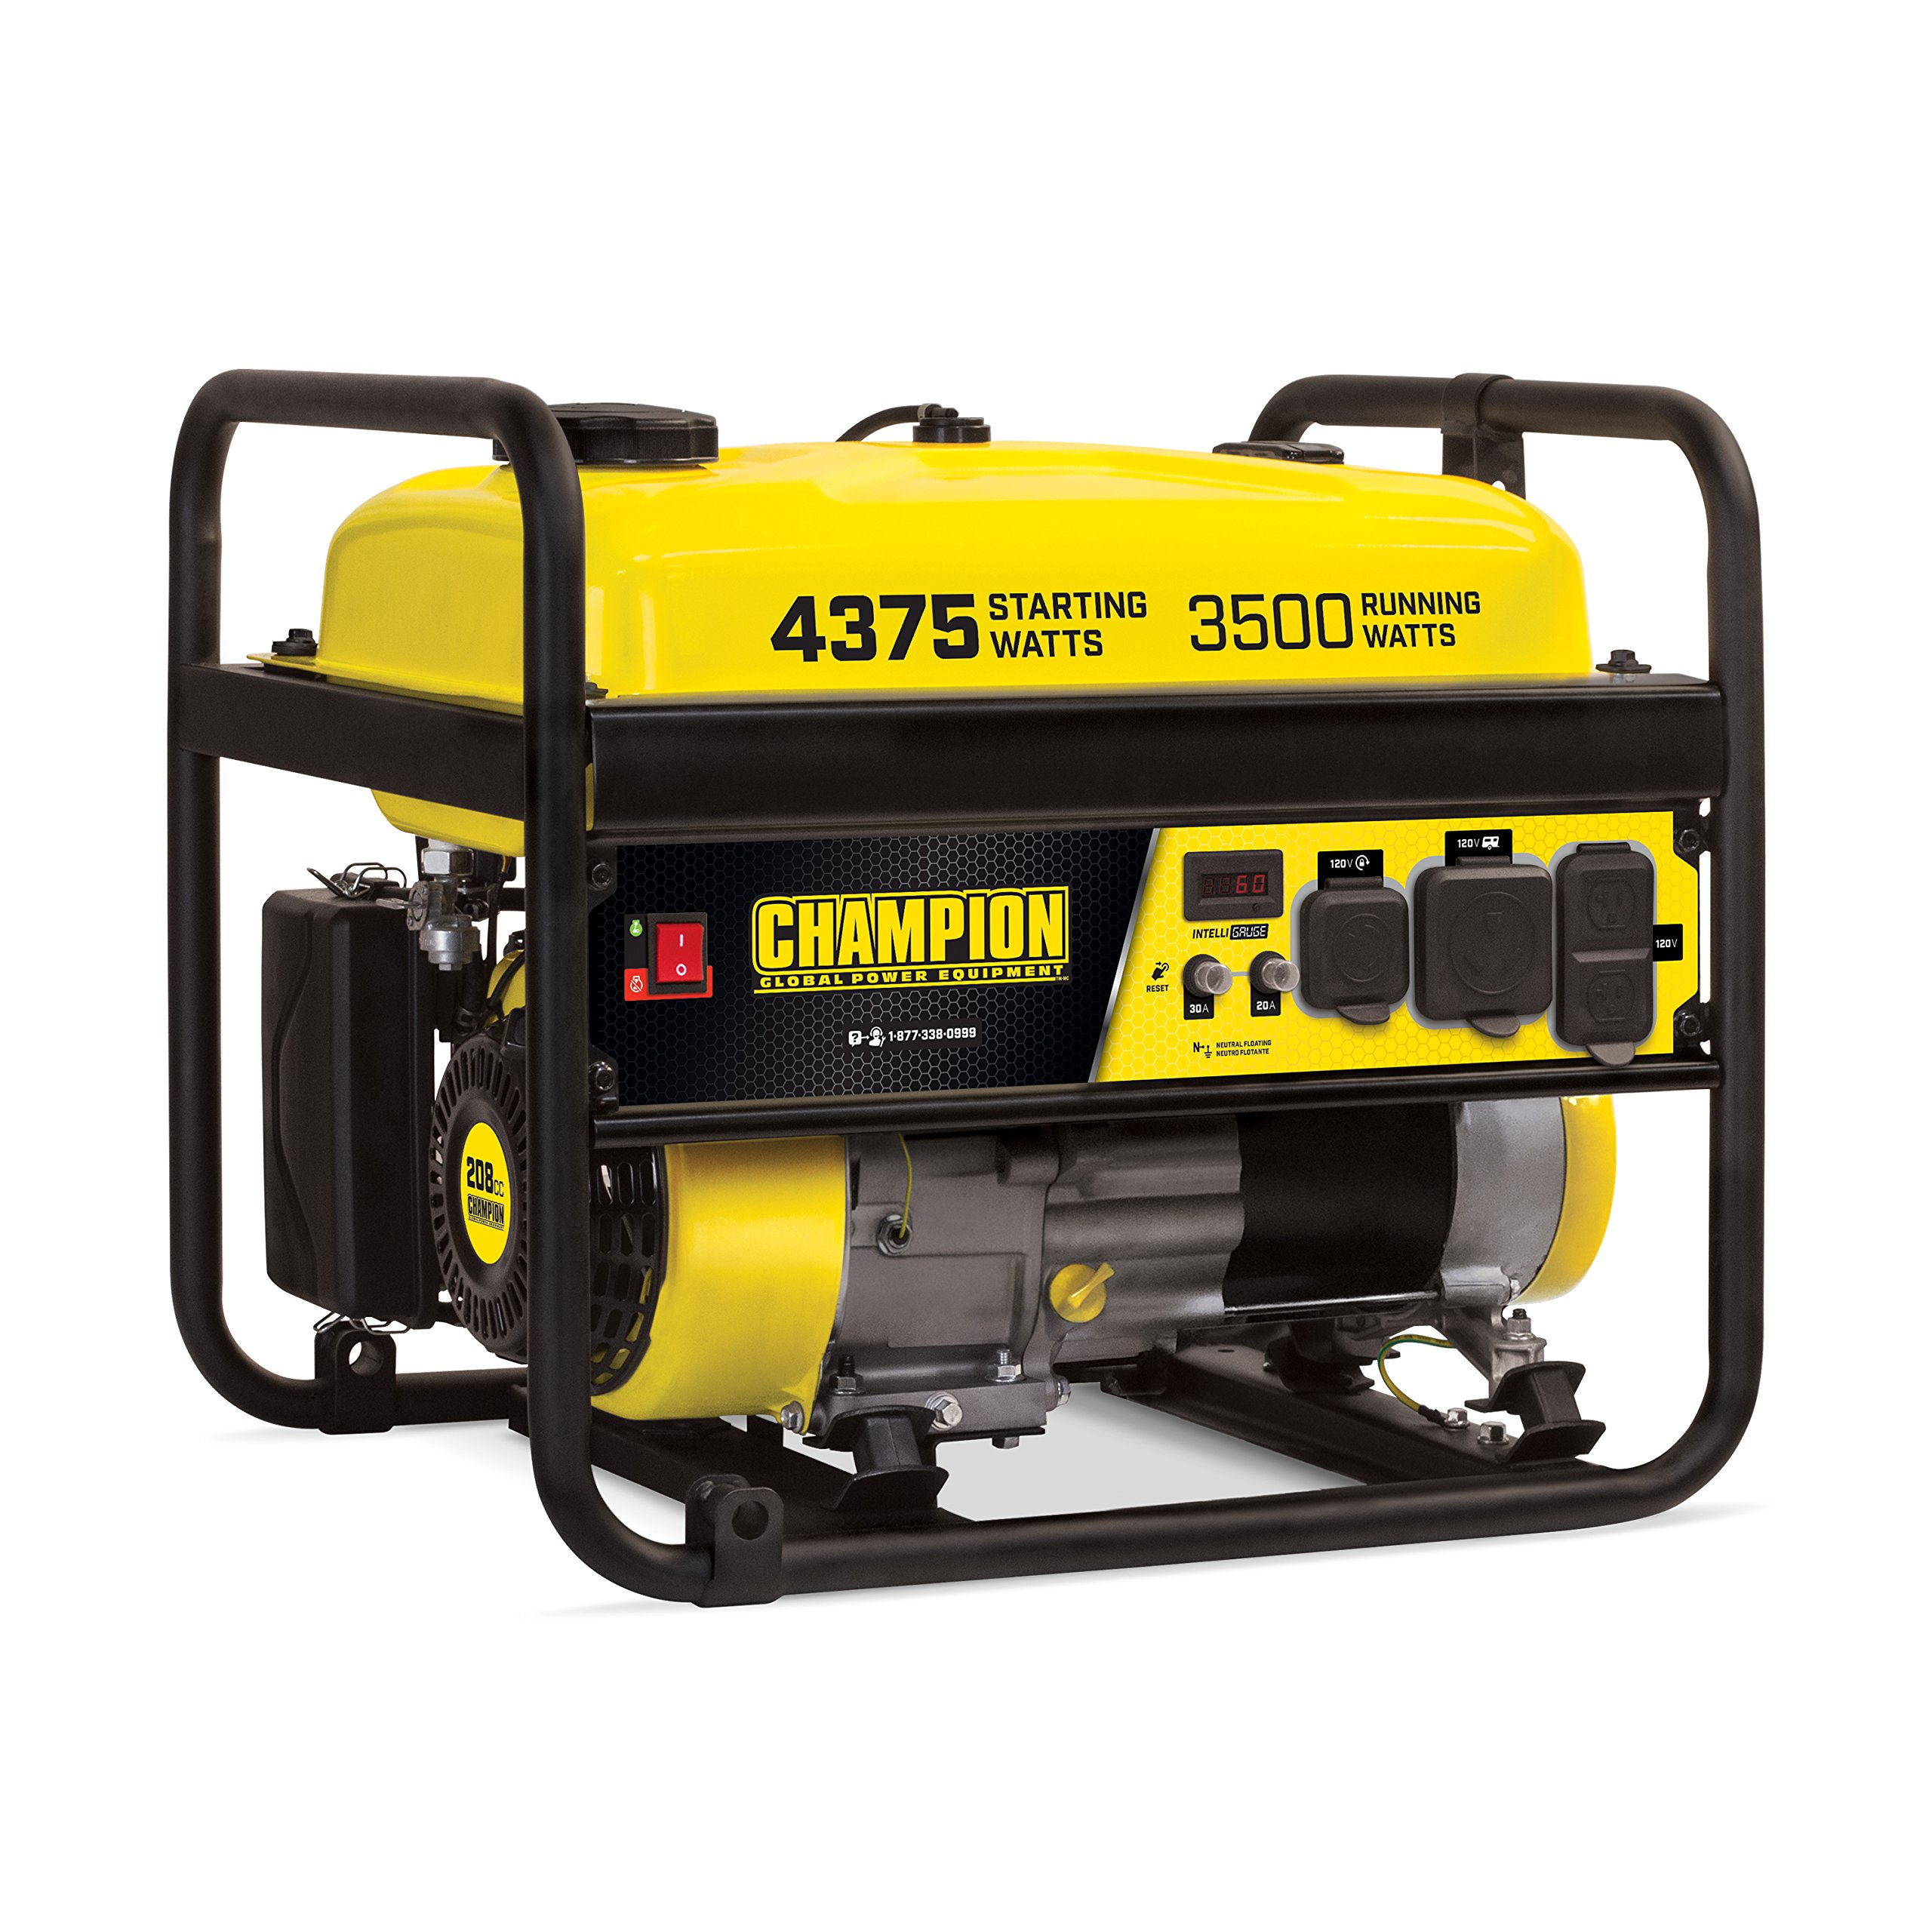 3500-Watt Champion RV Ready Portable Generator $257.30 + Free Shipping